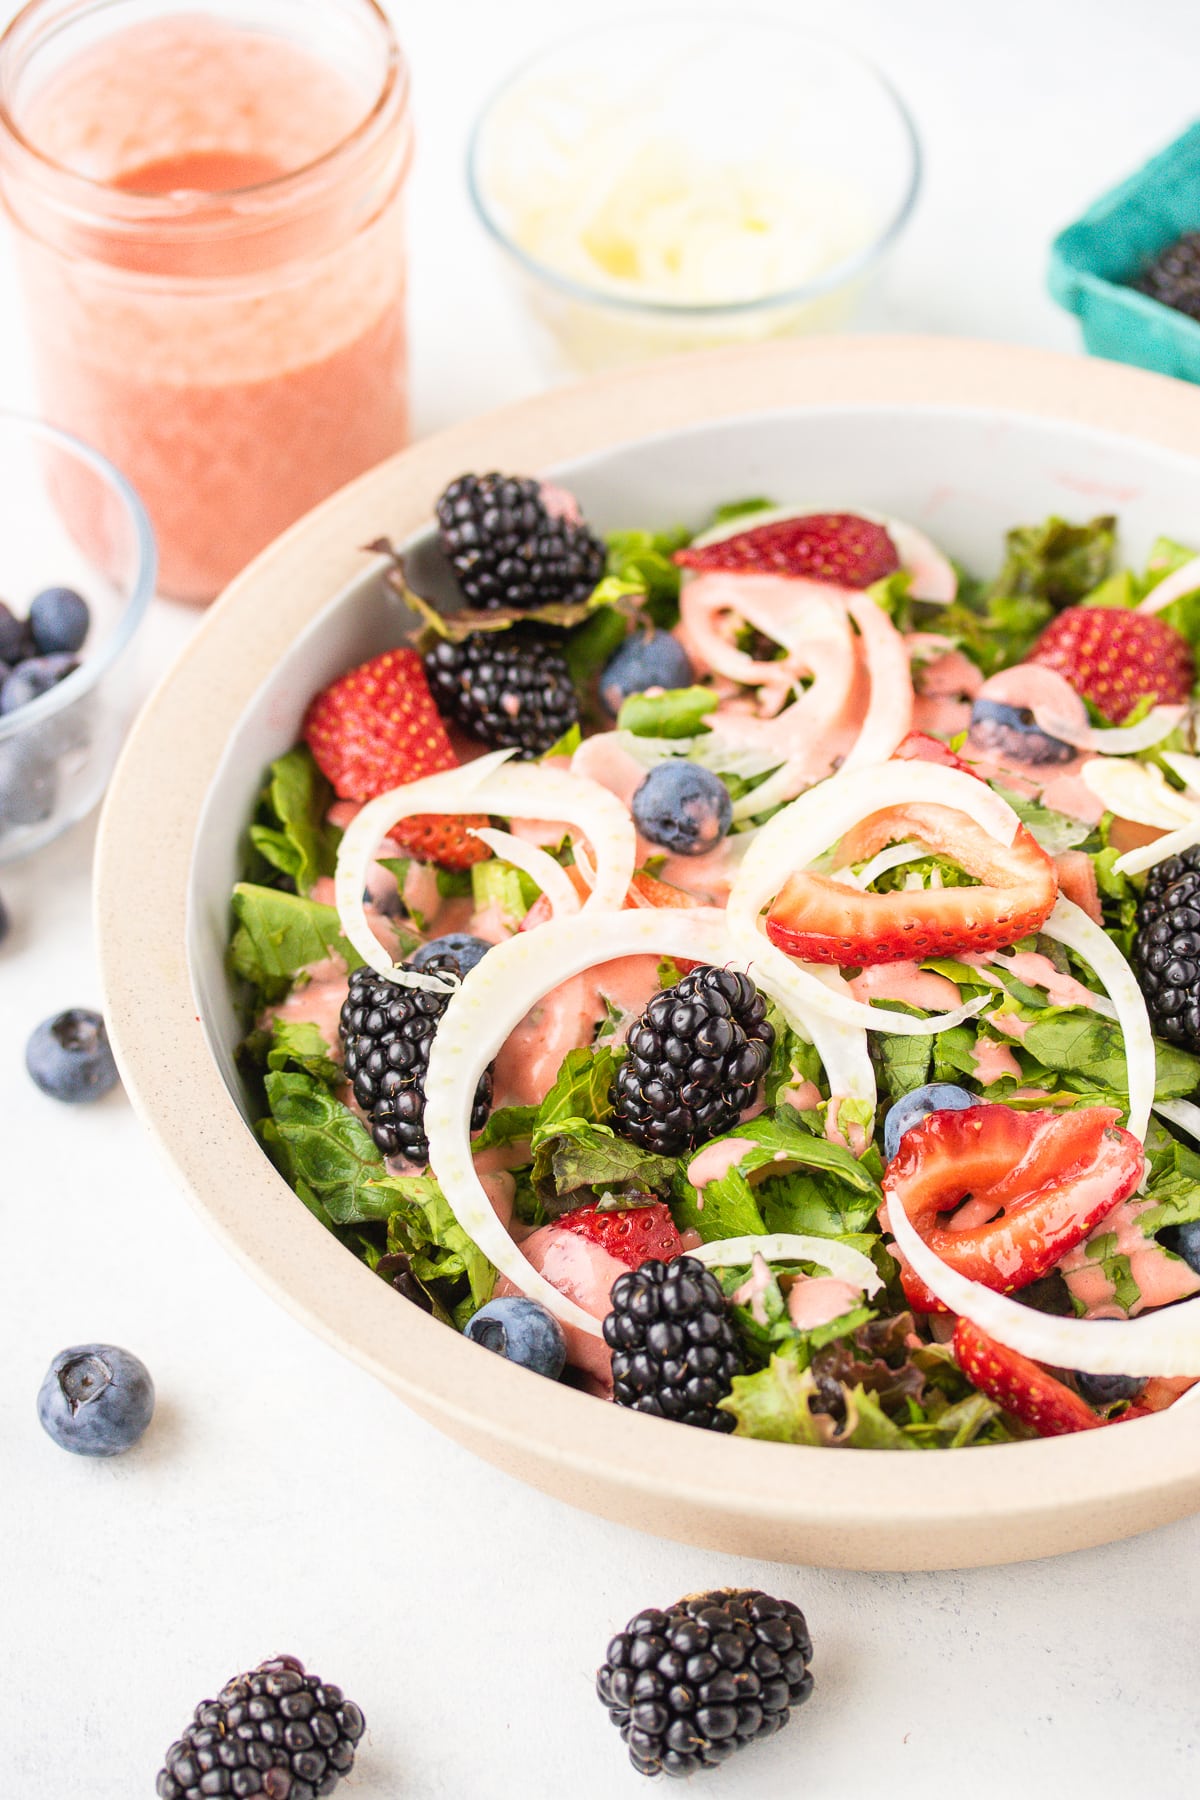 strawberry salad dressing on green salad.